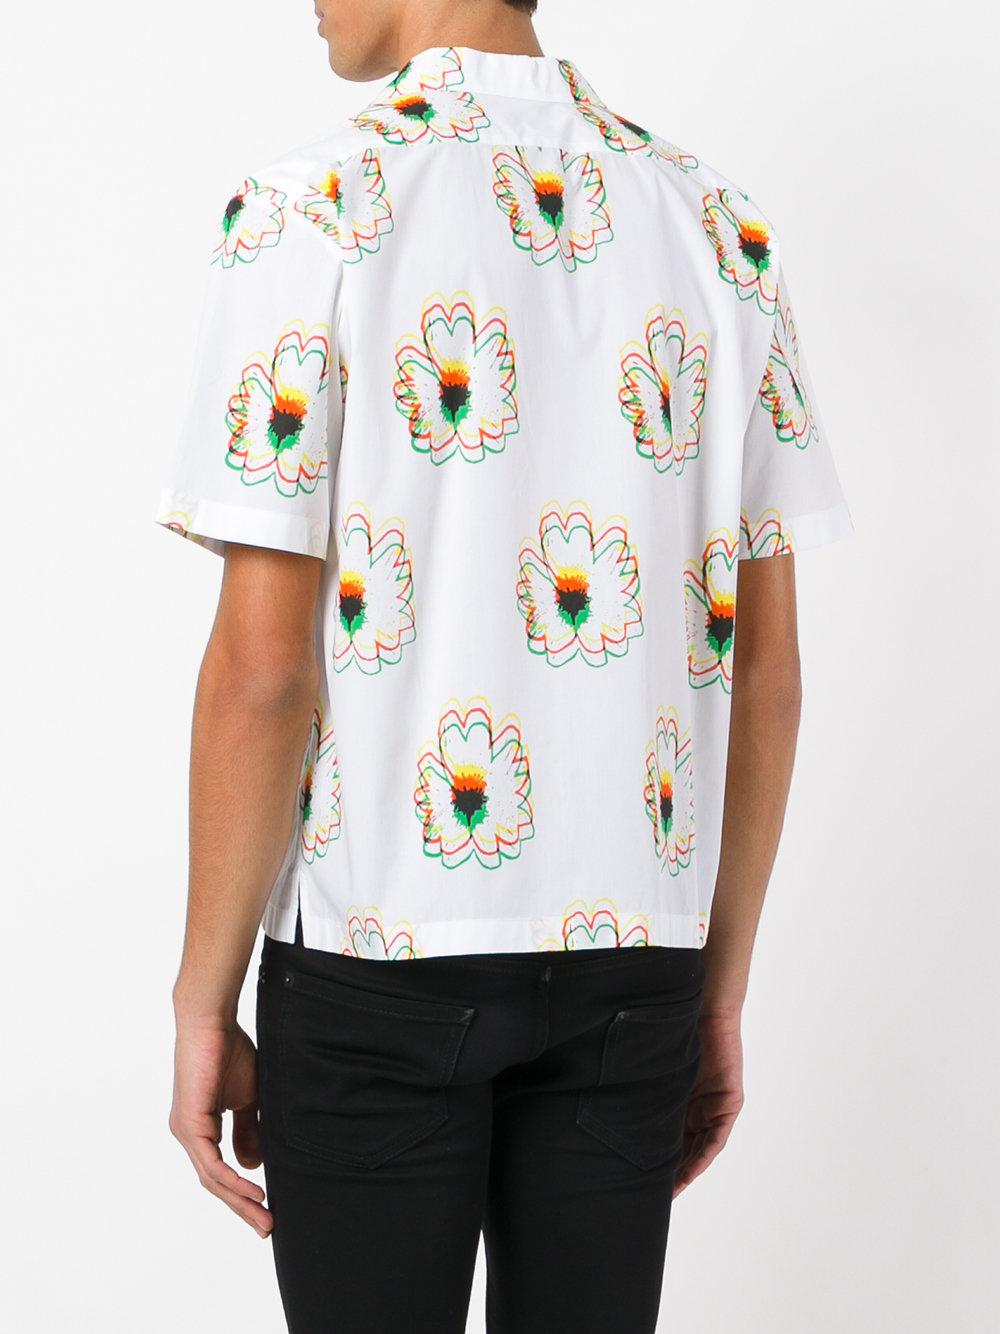 Stella McCartney Cotton Floral Print Bowling Shirt in White for Men - Lyst